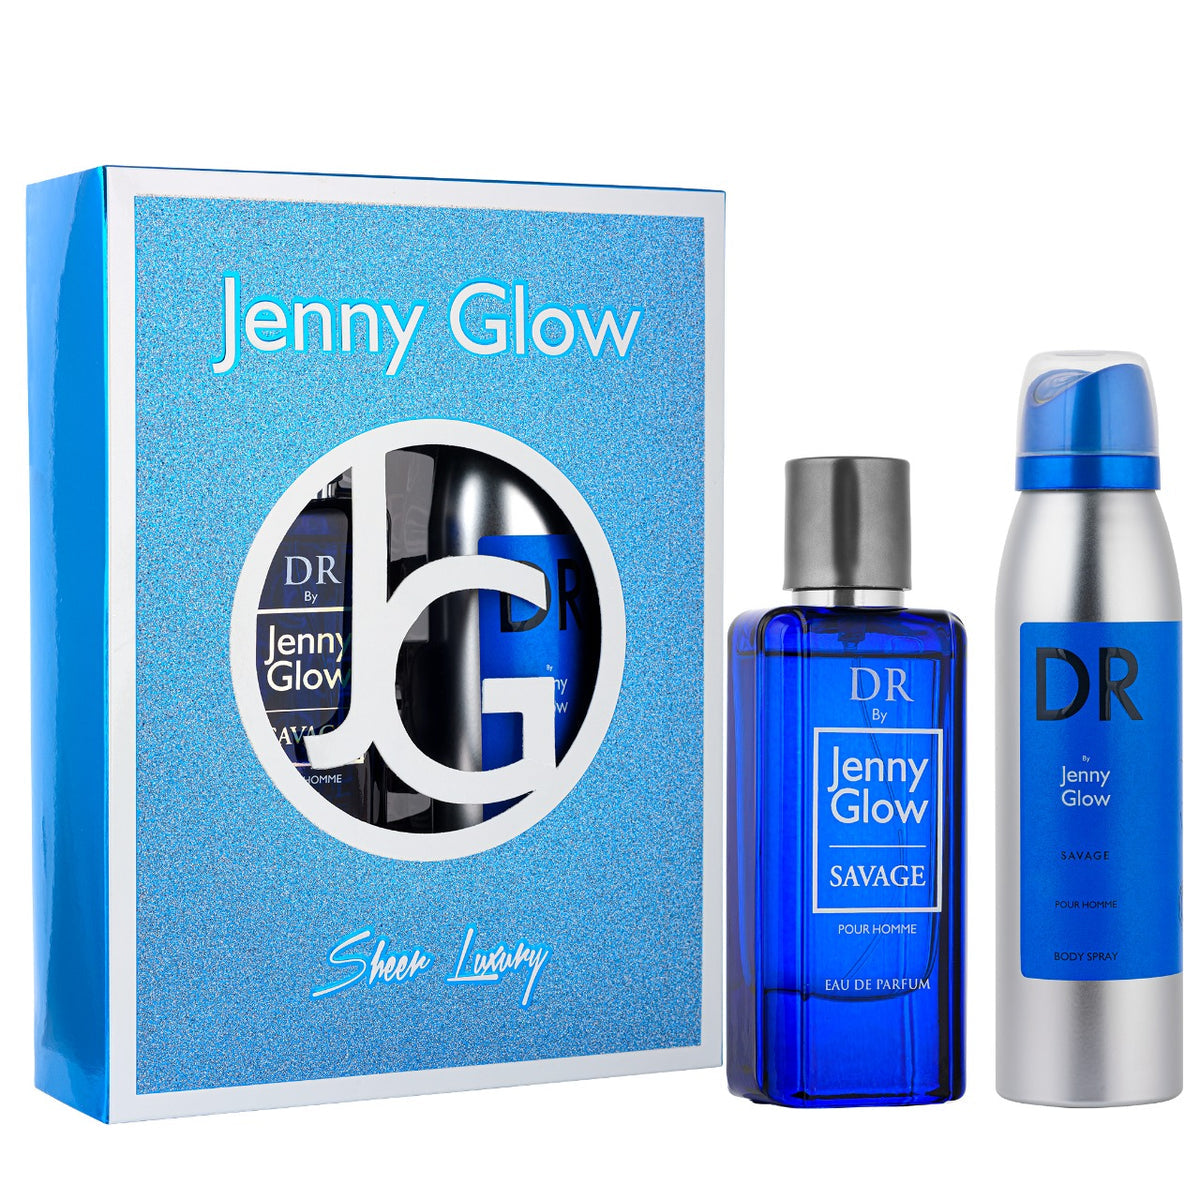 Jenny Glow Perfume & Body Spray Gift Set For Men - Savage